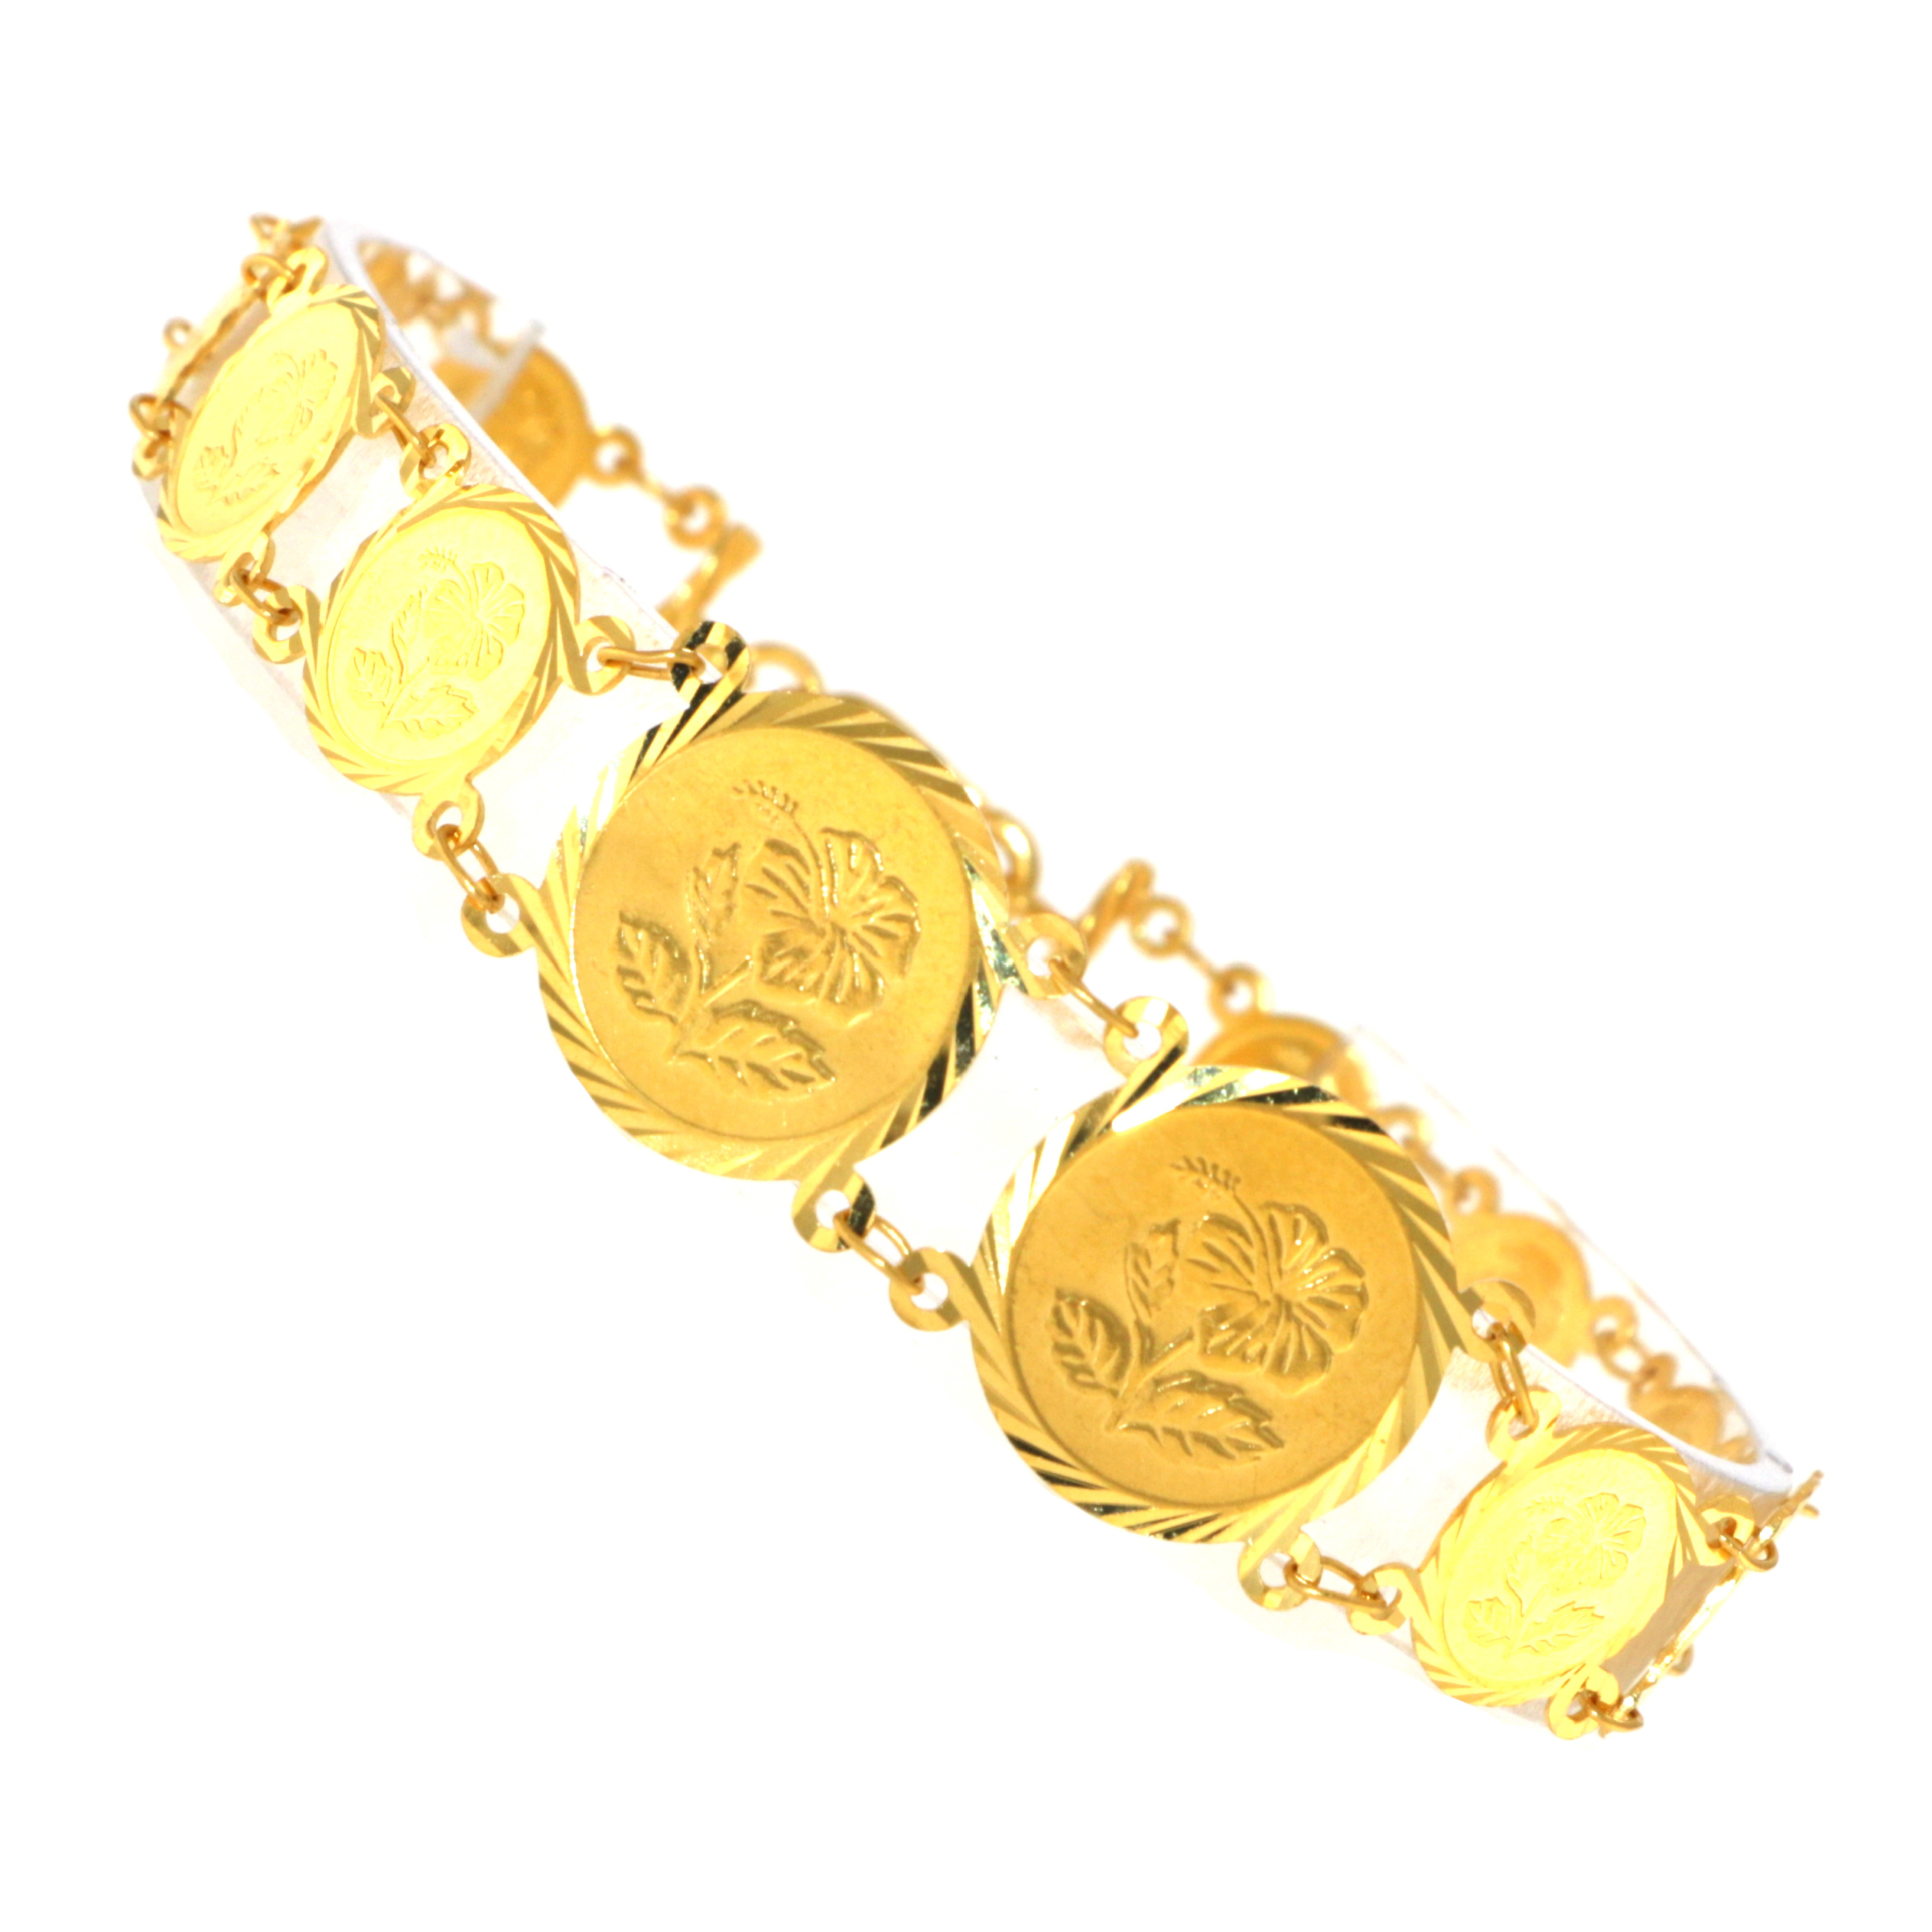 22carat Gold Coin Bracelet